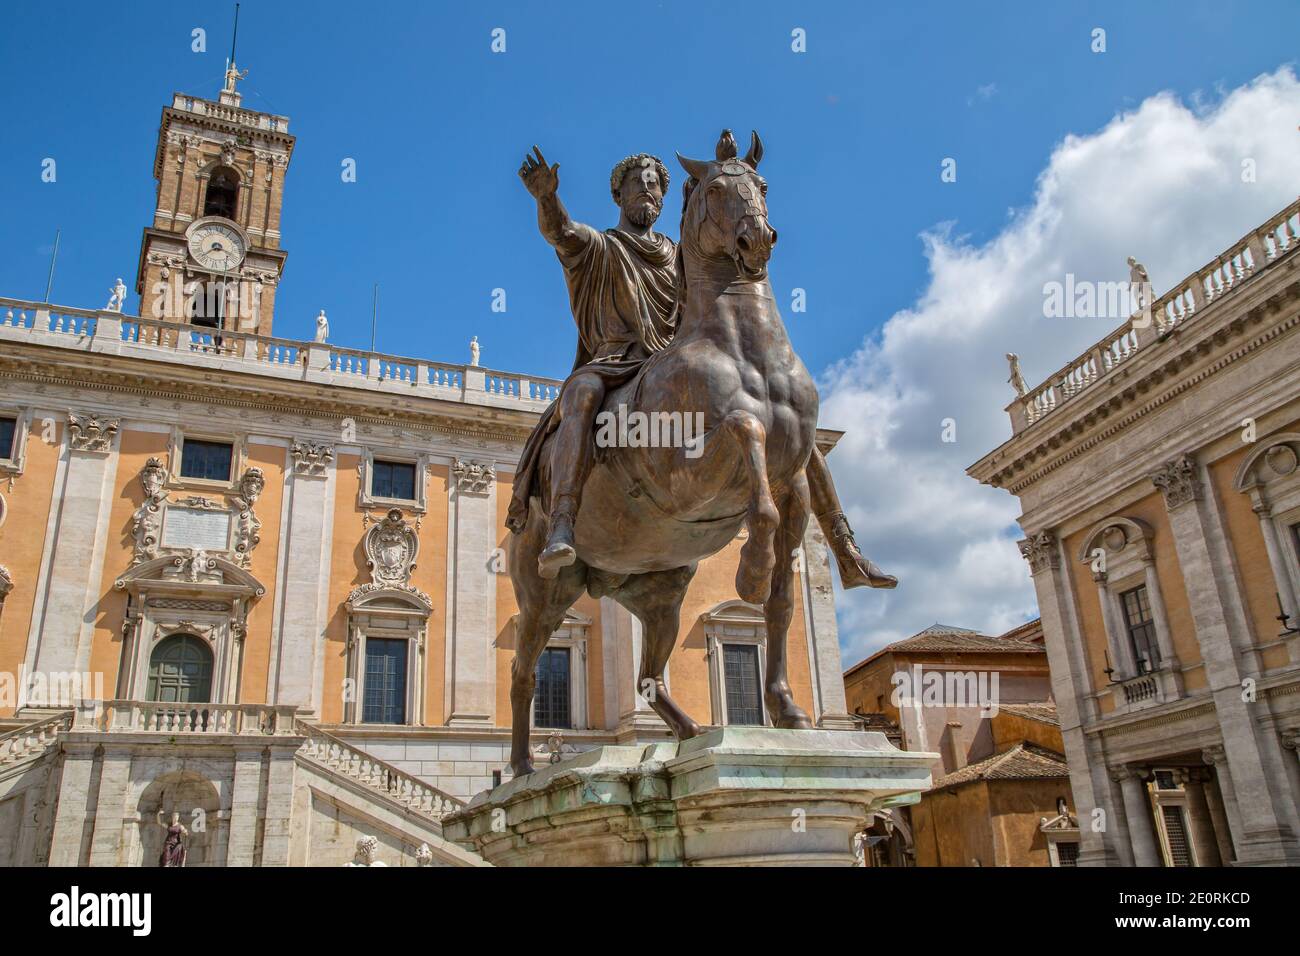 Statue of Marcus Aurelius on the Capitoline Hill. The equestrian statue of Marcus Aurelius in front of the Senatorial Palace, Rome, Italy Stock Photo